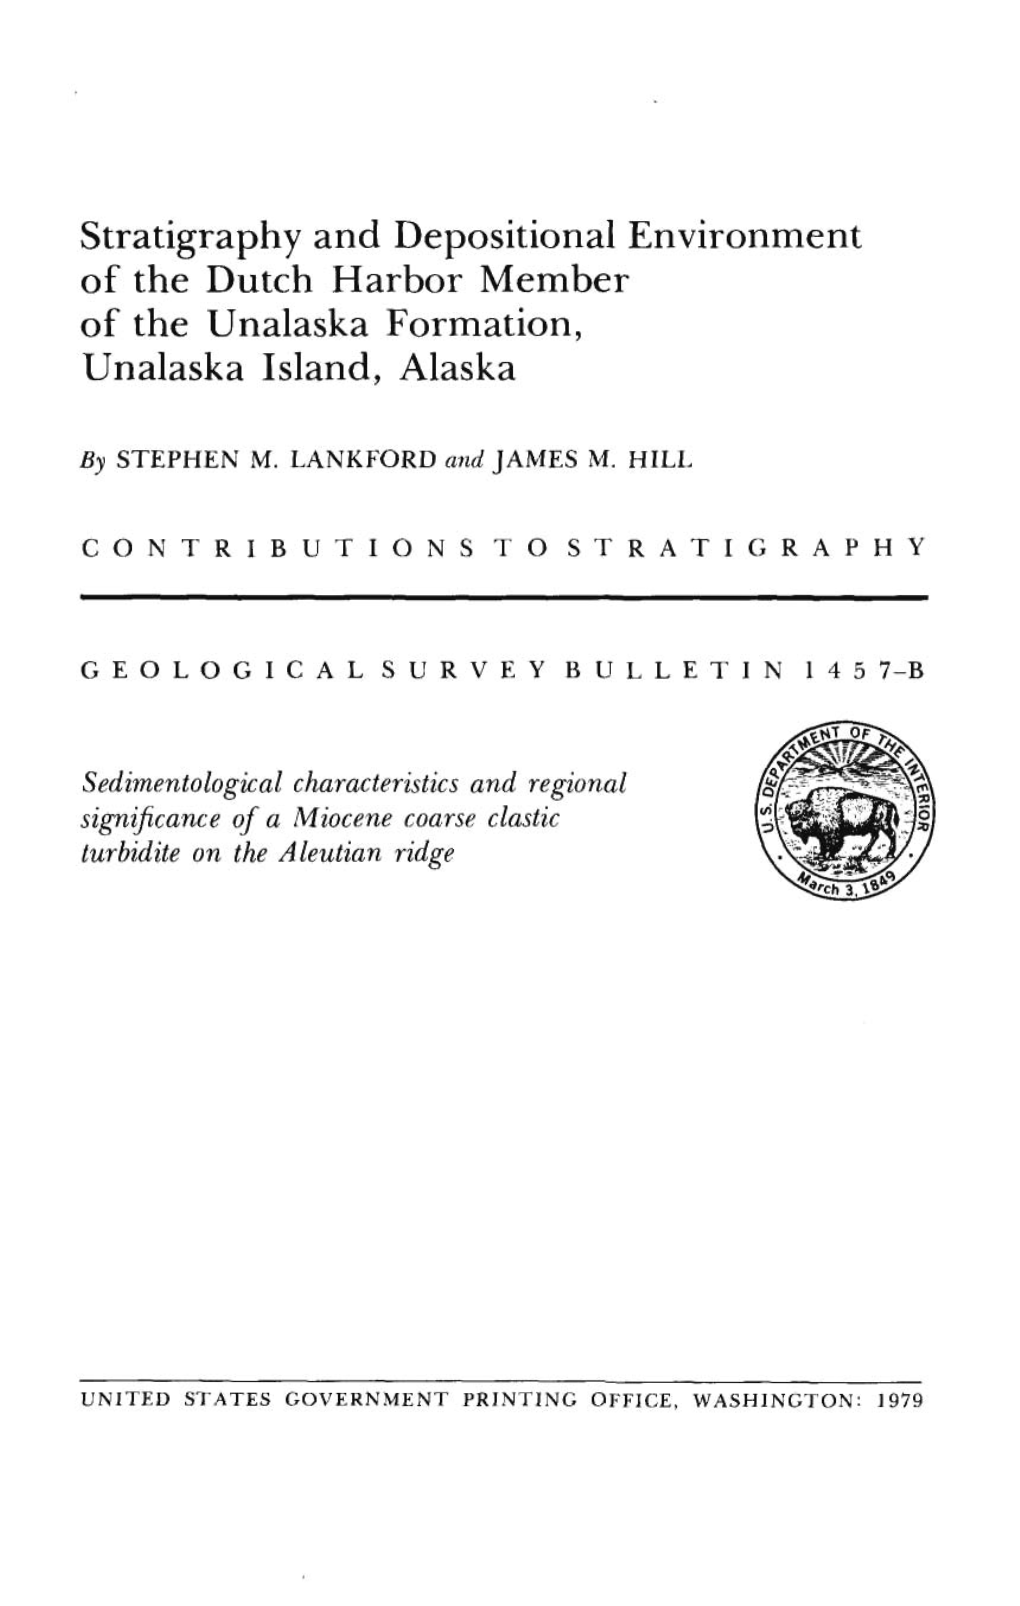 Stratigraphy and Depositional Environment of the Dutch Harbor Member of the Unalaska Formation, Unalaska Island, Alaska